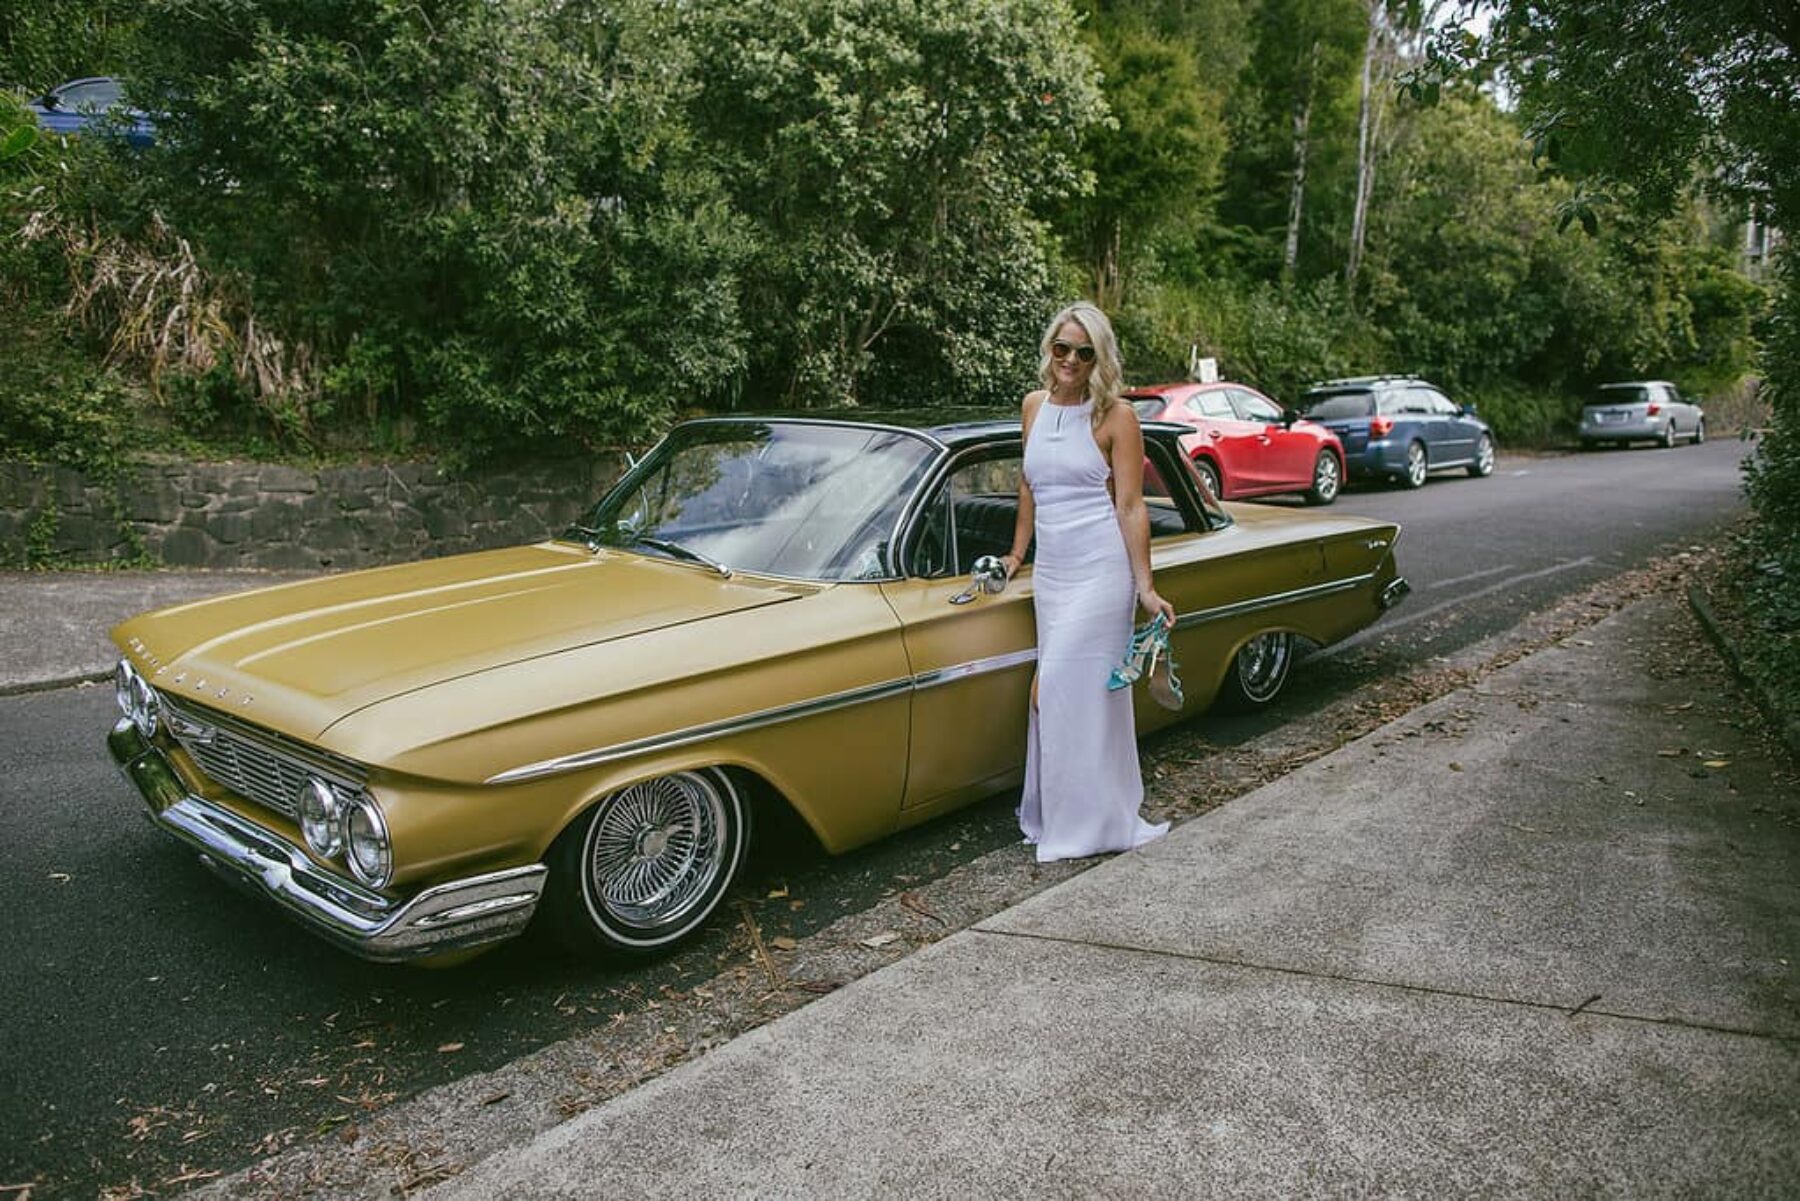 Auckland wedding at Titirangi Beach - photography by Greta Kenyon